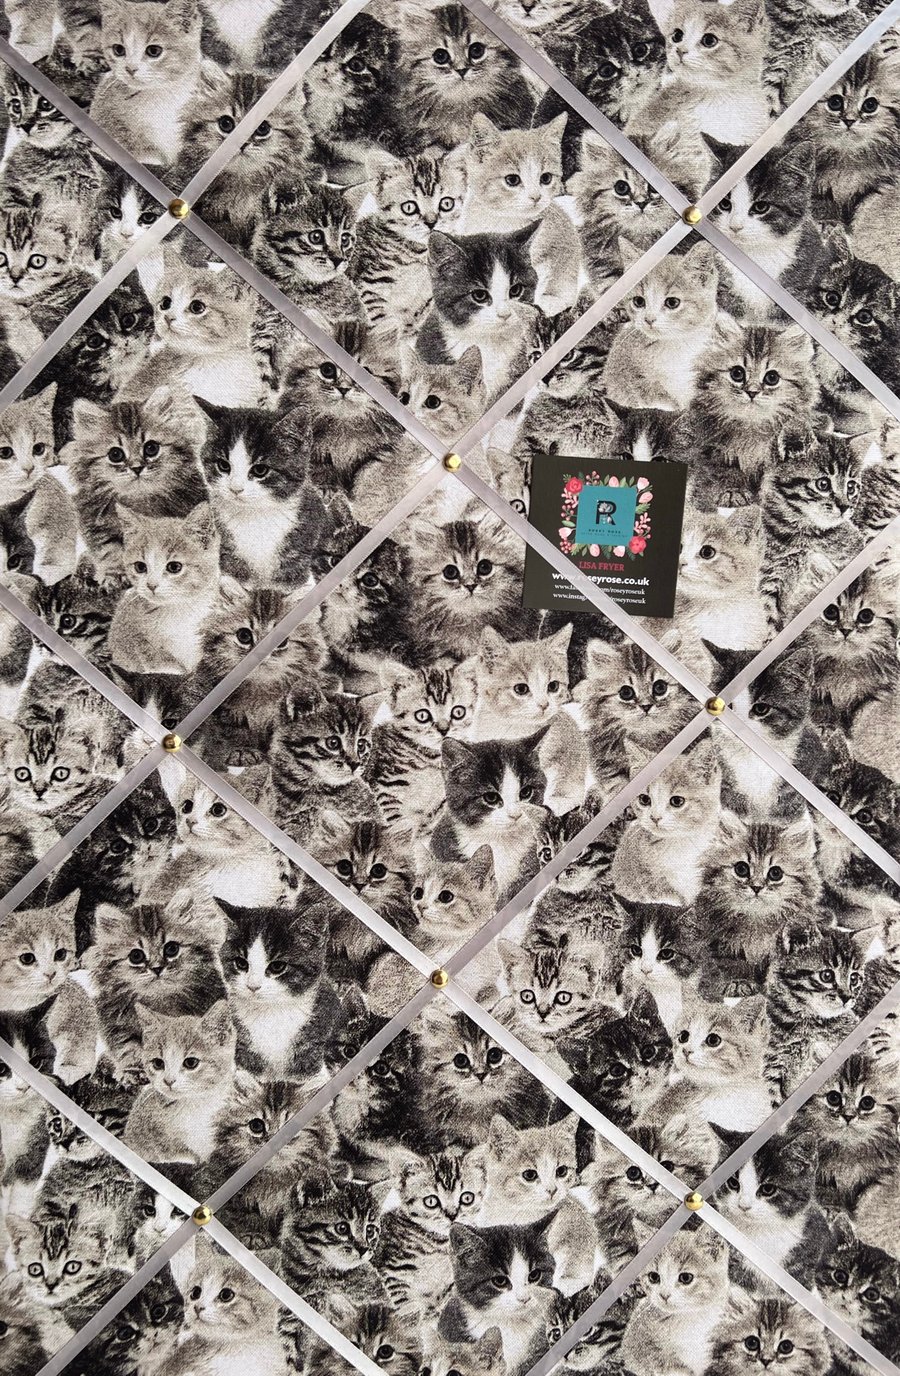 Handmade Bespoke Memo Notice Board Monochrome Black White Cats Kittens Fabric